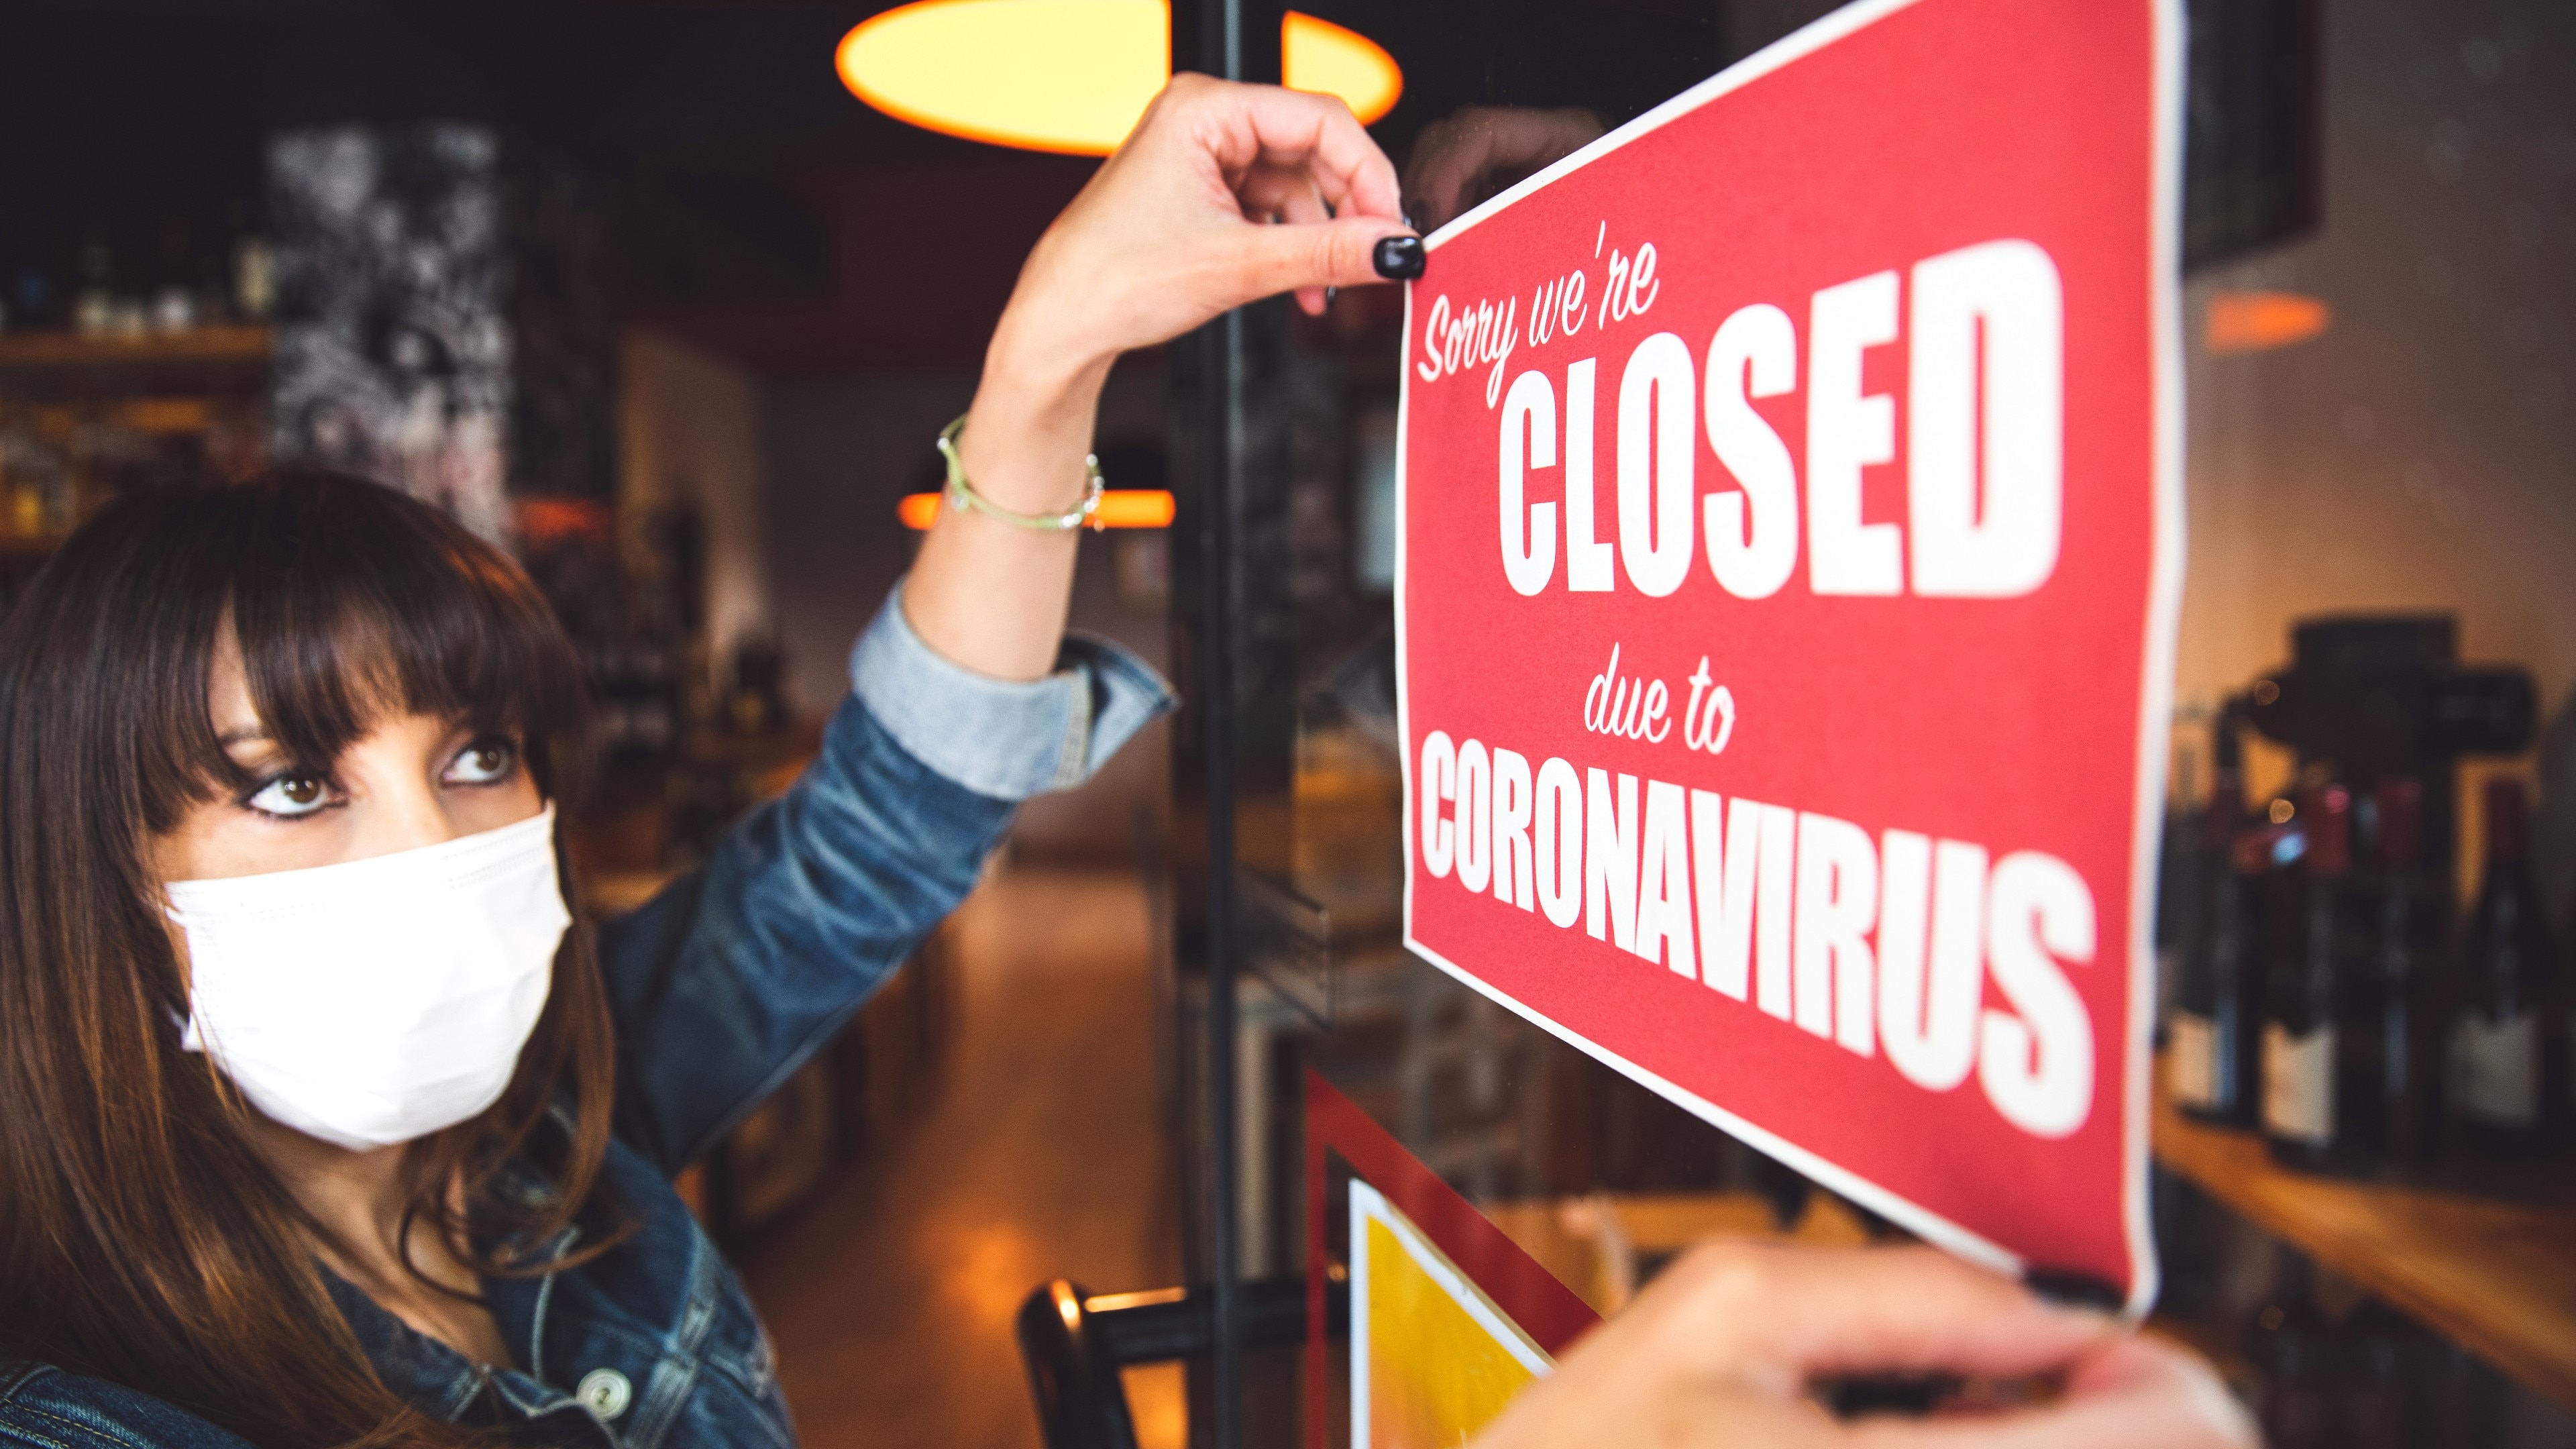 Business closed due to coronavirus sign